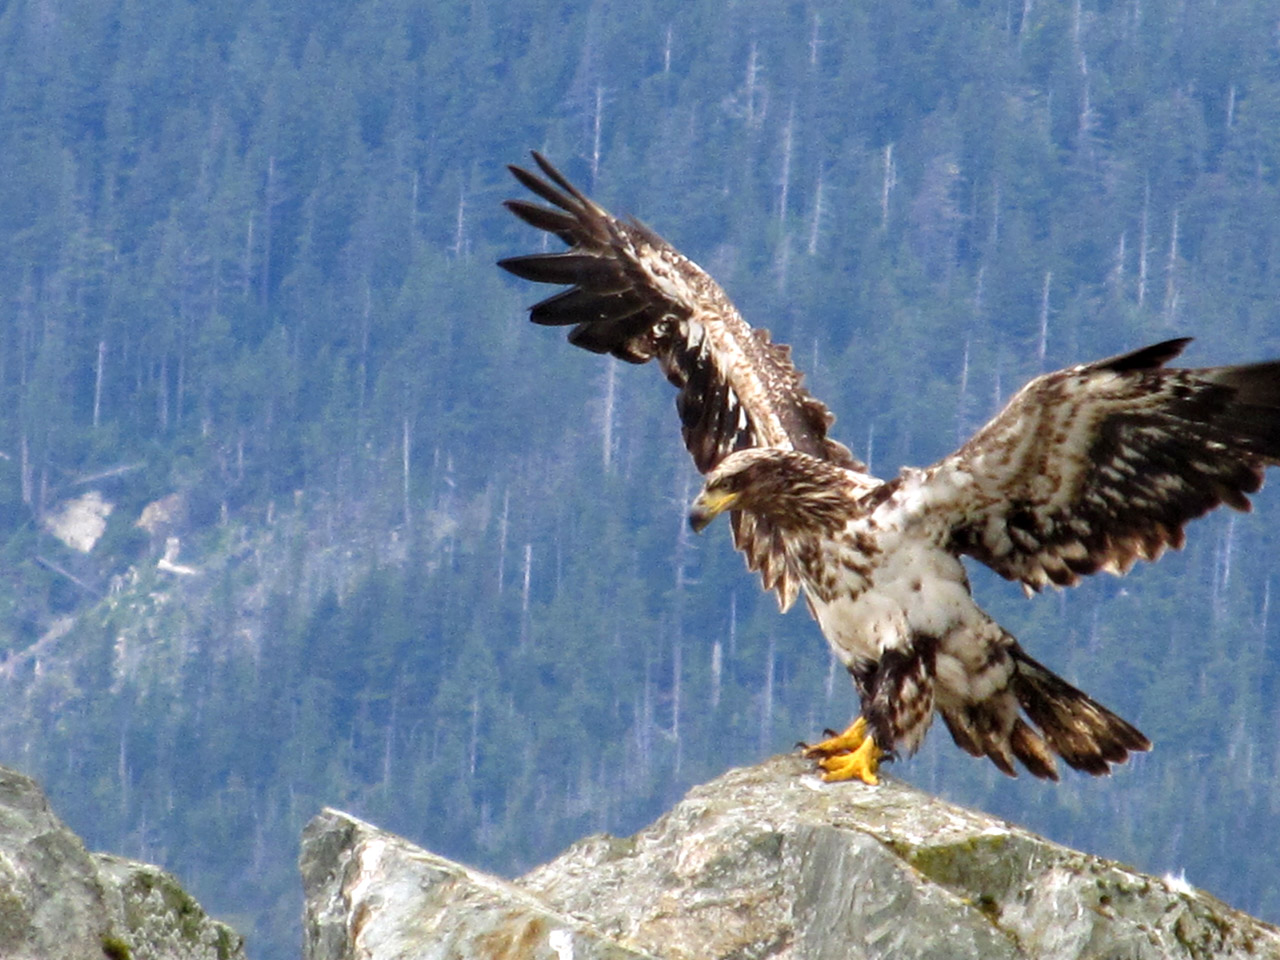 A juvenile bald eagle landing on a rock